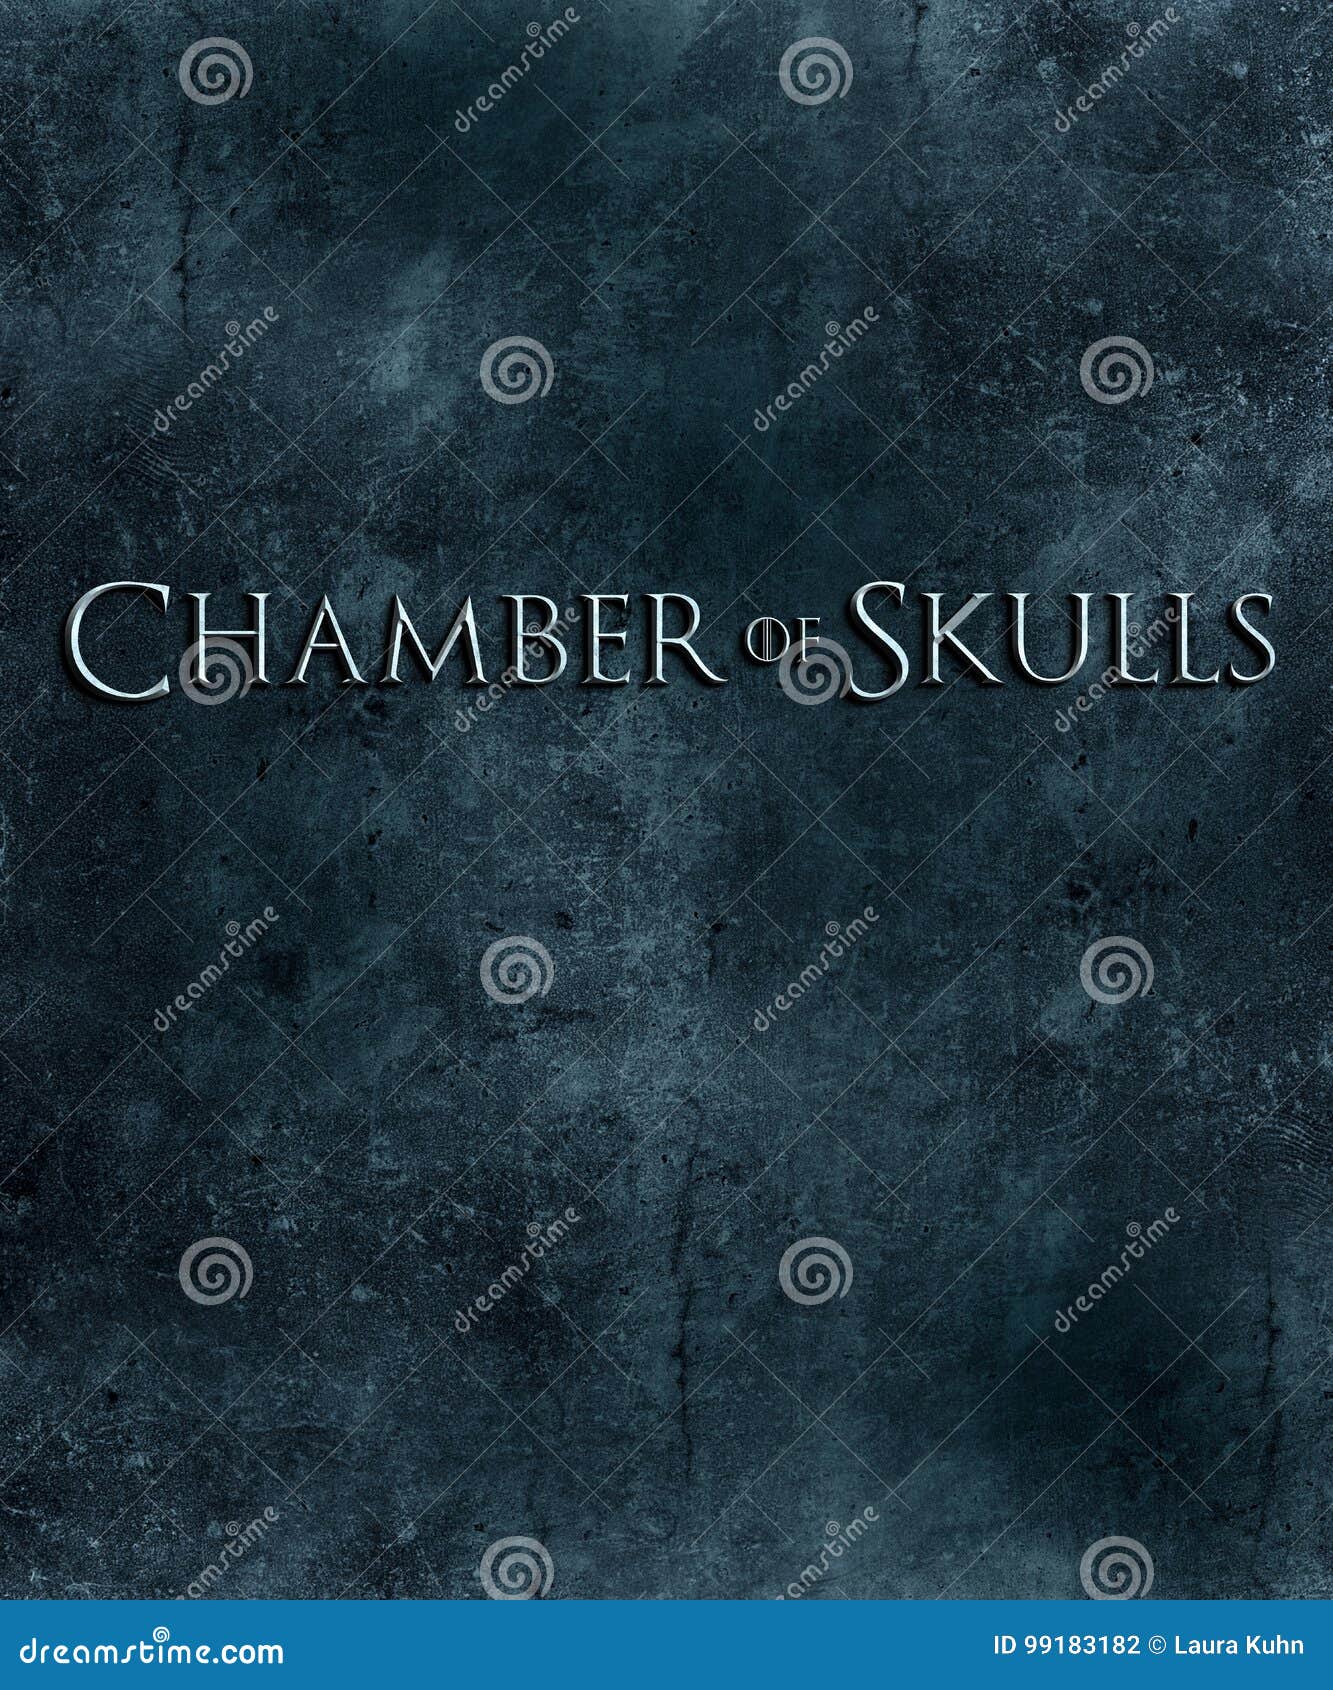 chamber of skulls poster artwork original background texture